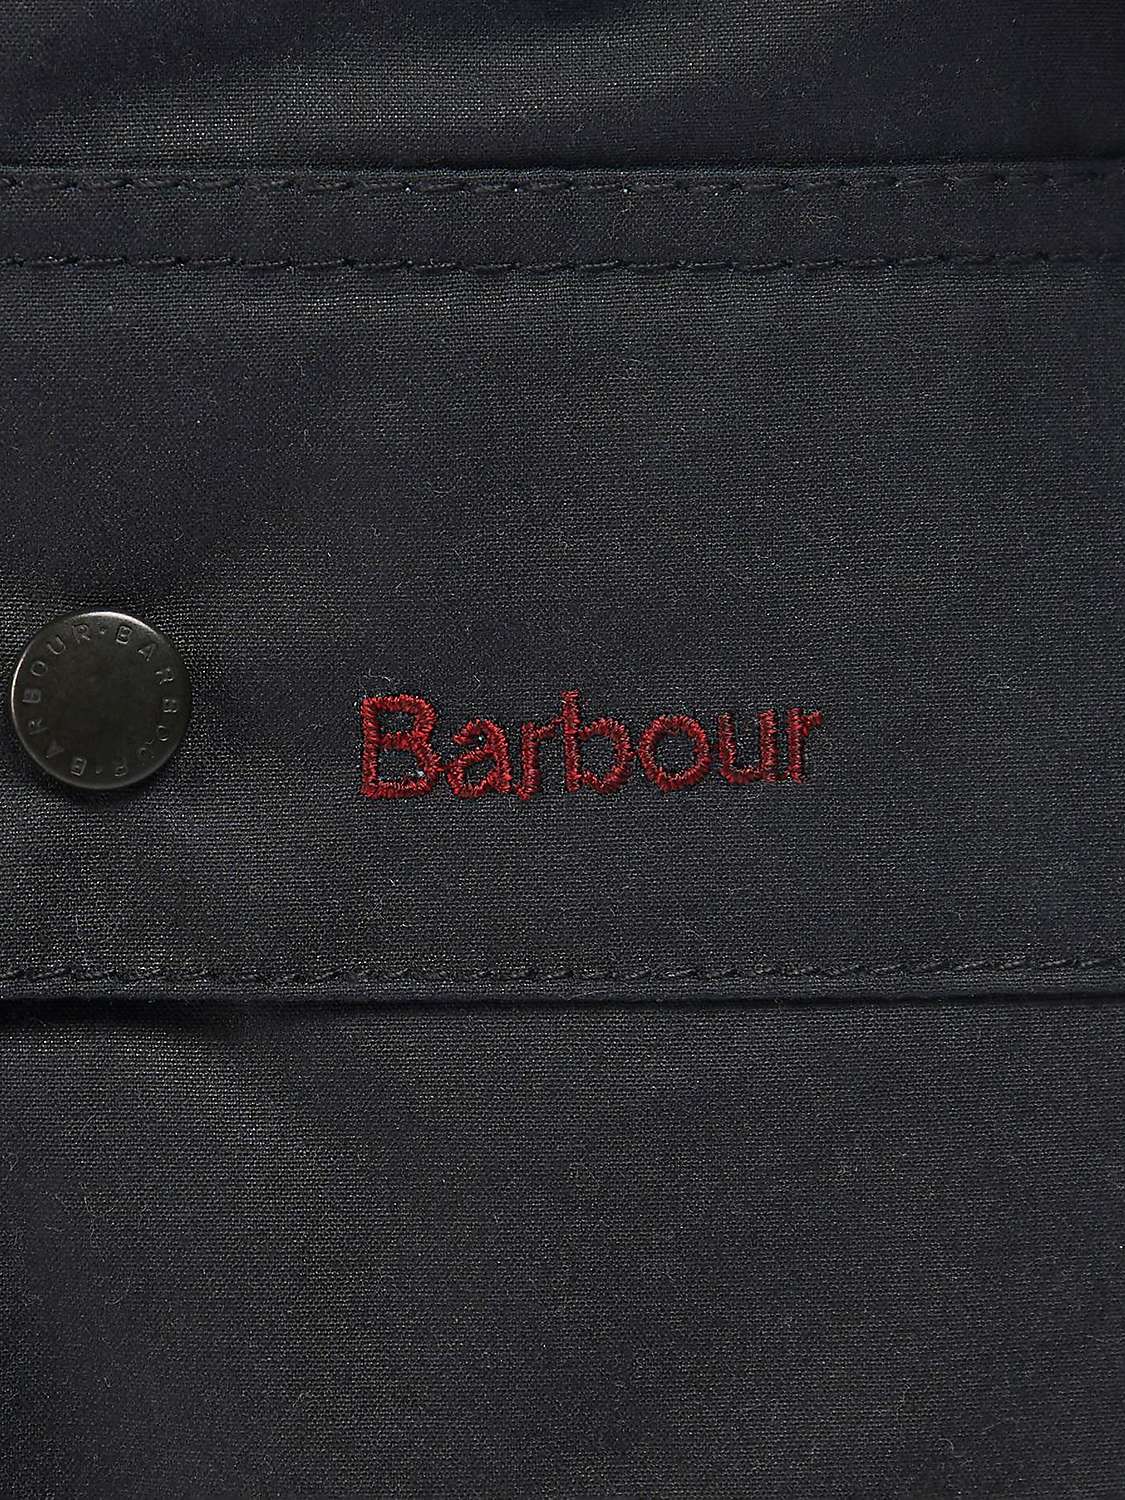 Buy Barbour Kids' Beadle Wax Jacket, Navy Online at johnlewis.com